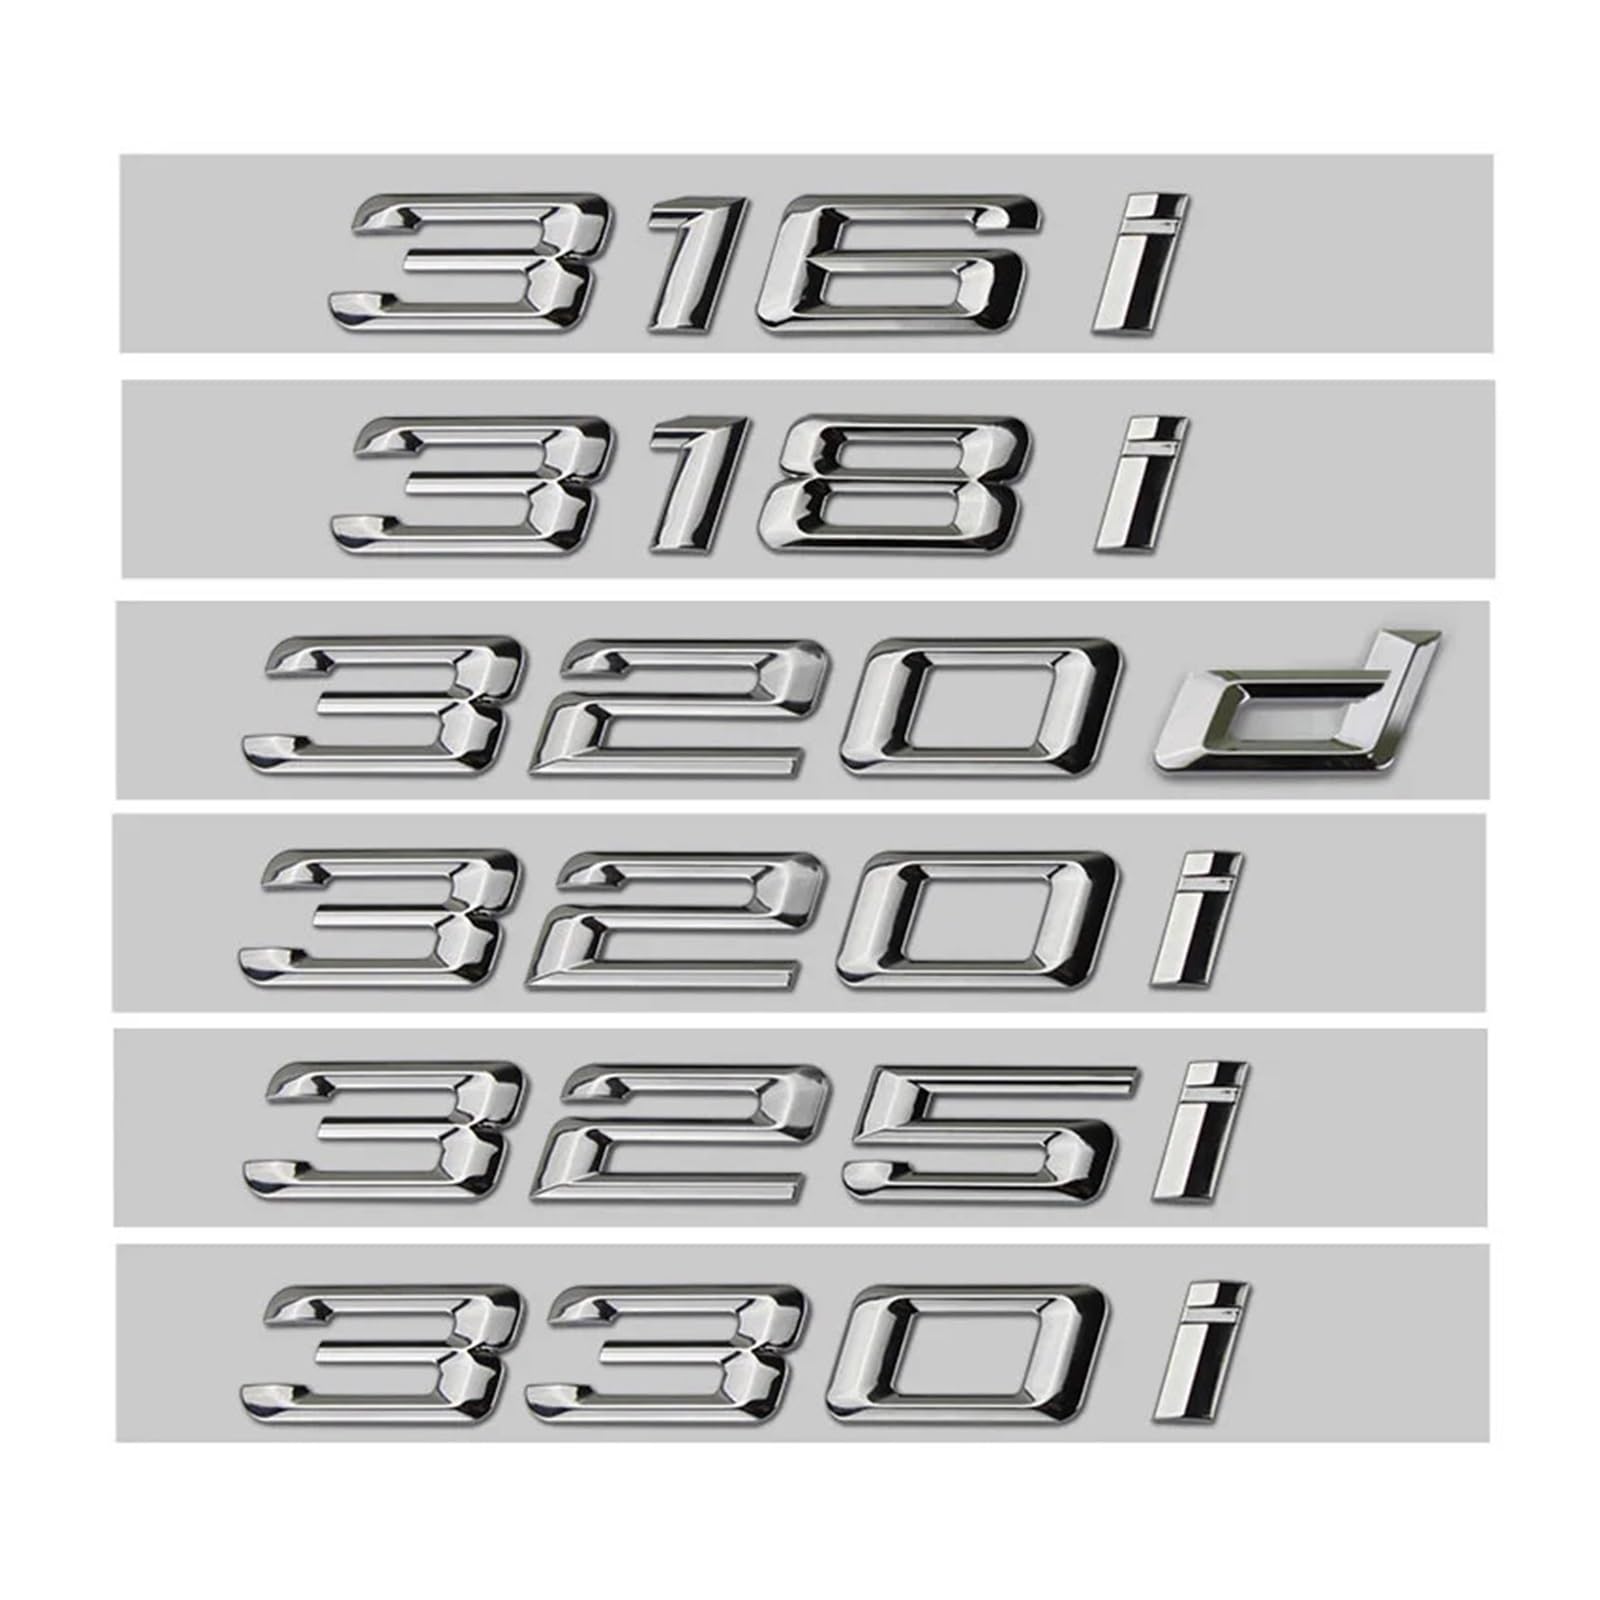 NIBOTT 3D ABS Auto Buchstaben Stamm Abzeichen 316i 318i 320i 325i 328i 330i 335i 330d 320d Emblem Logo Aufkleber Fit for BMW E46 F30 E90 Zubehör (Color : Chrome Silver, Size : 325i) von NIBOTT